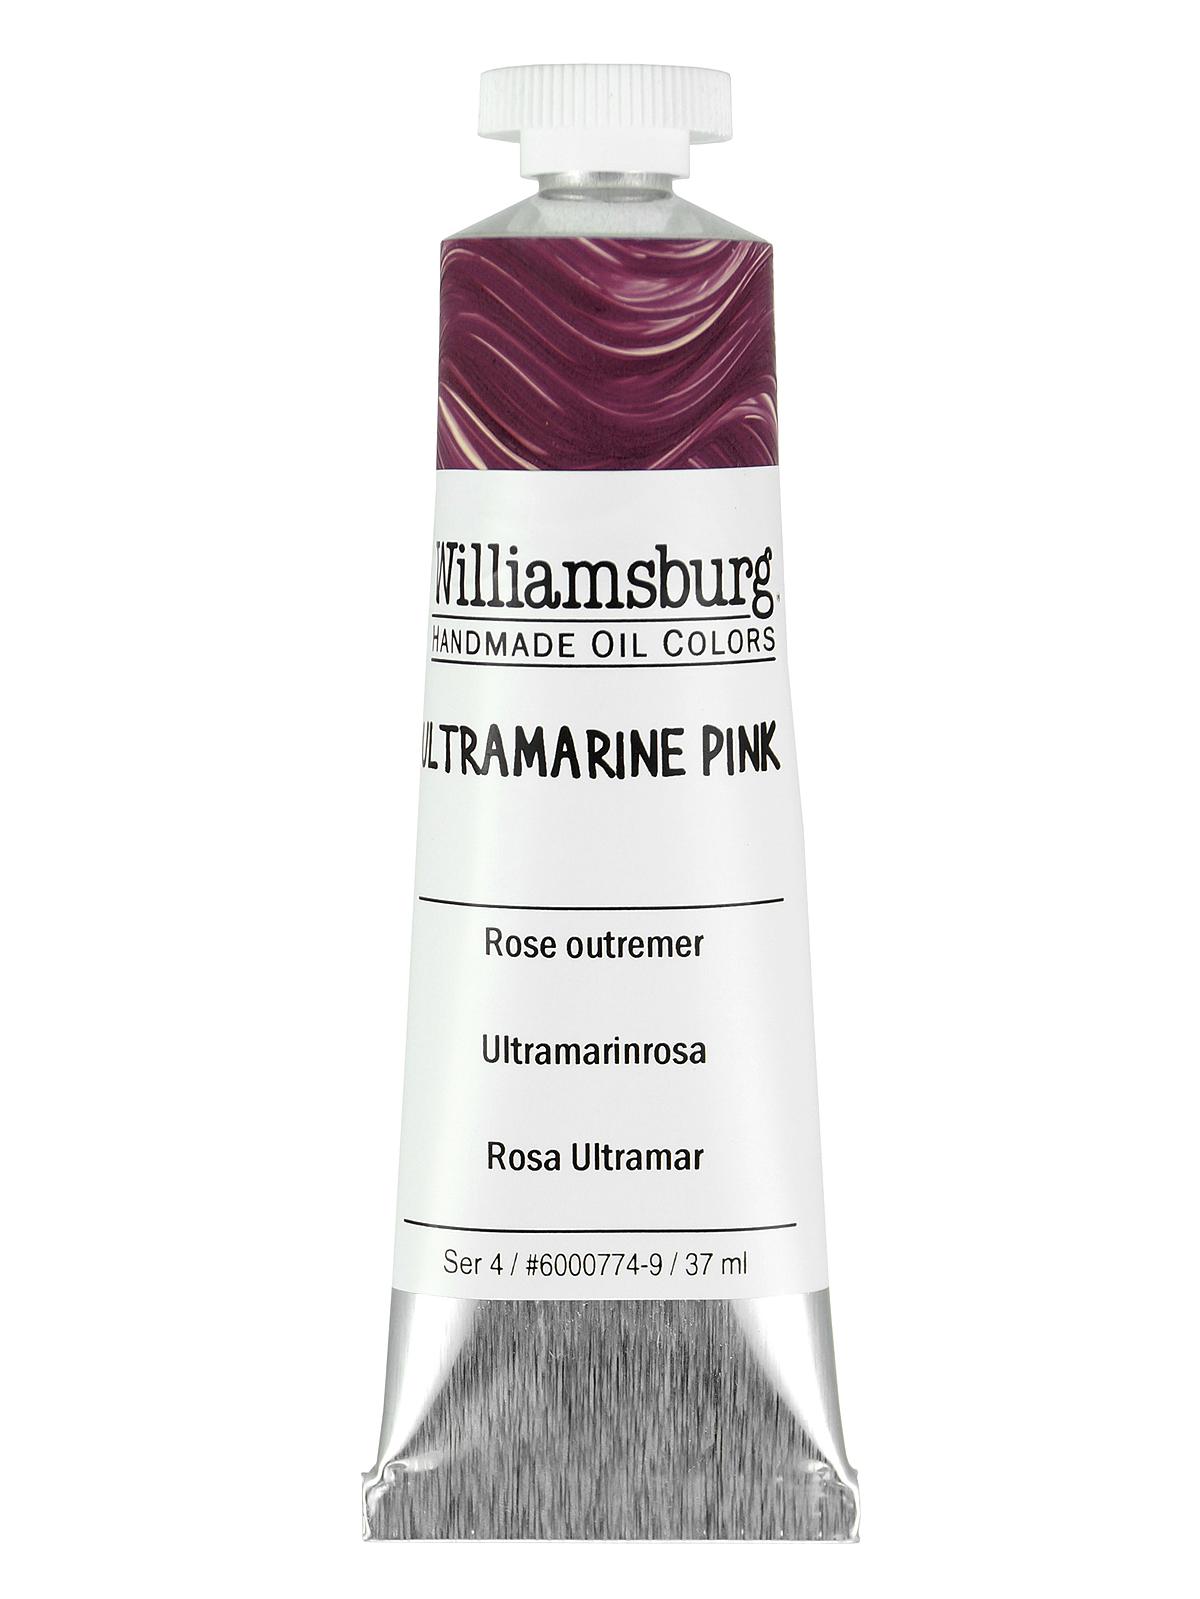 Handmade Oil Colors Ultramarine Pink 37 Ml